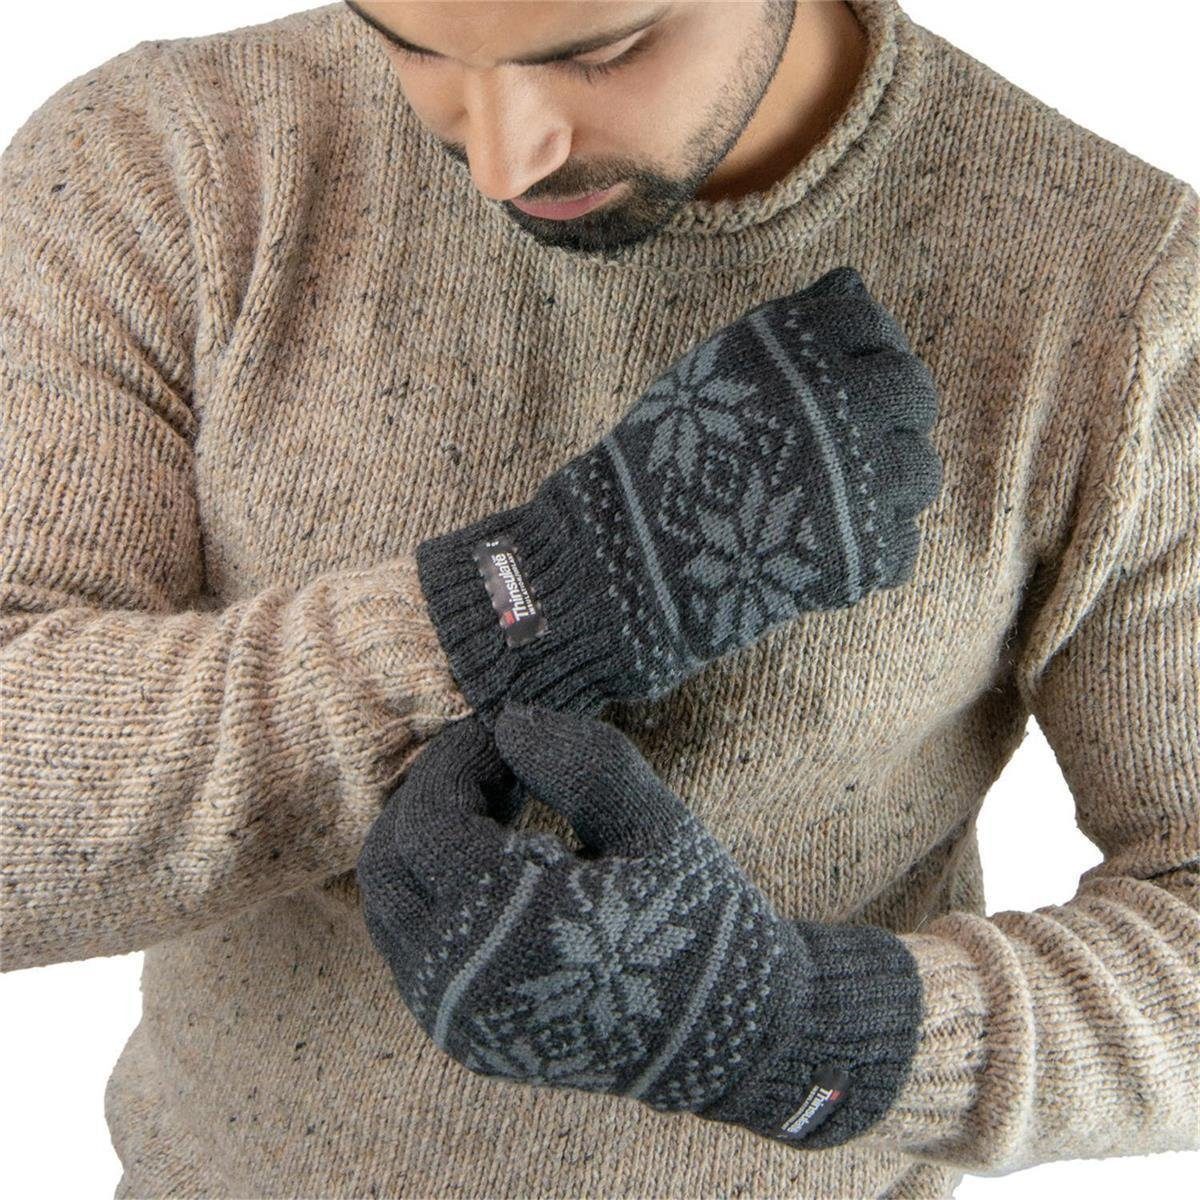 Tarjane Muster Strickhandschuhe 3M Handschuhe Unisex Anthrazit mit Thinsulate